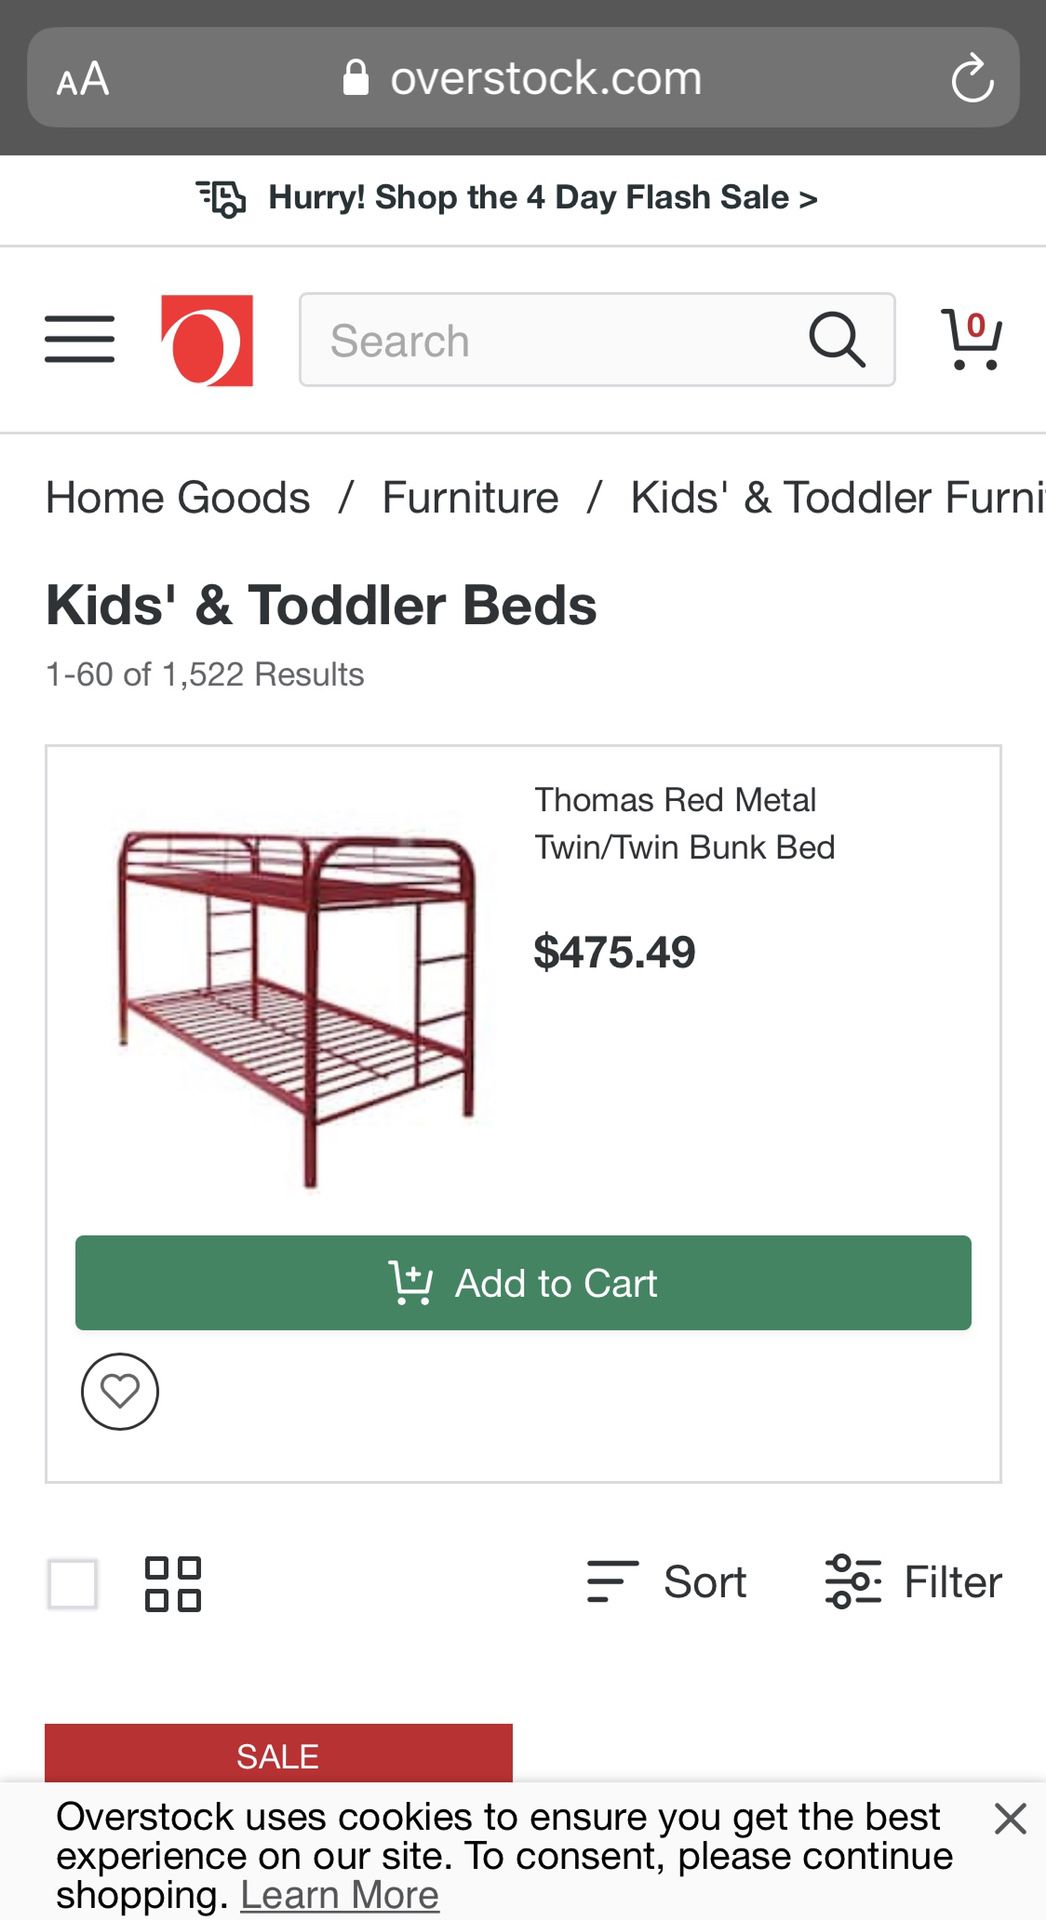 Red metal bunk bed